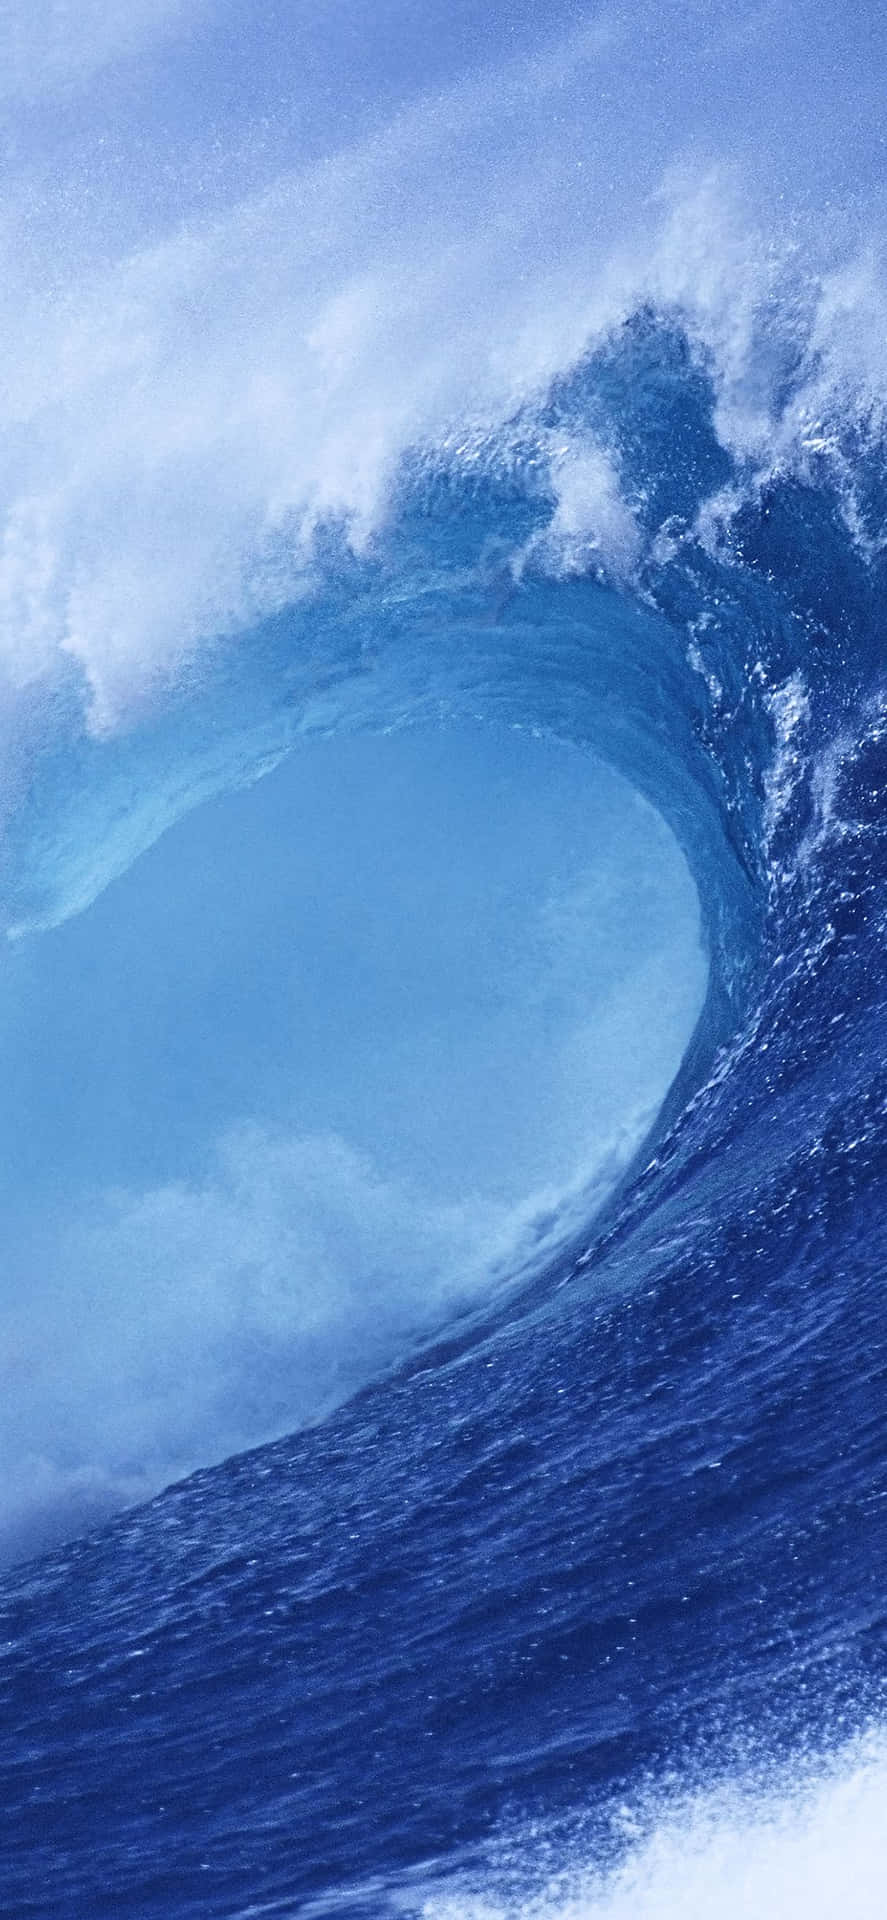 Great Wave Foaming Water iPhone Wallpaper